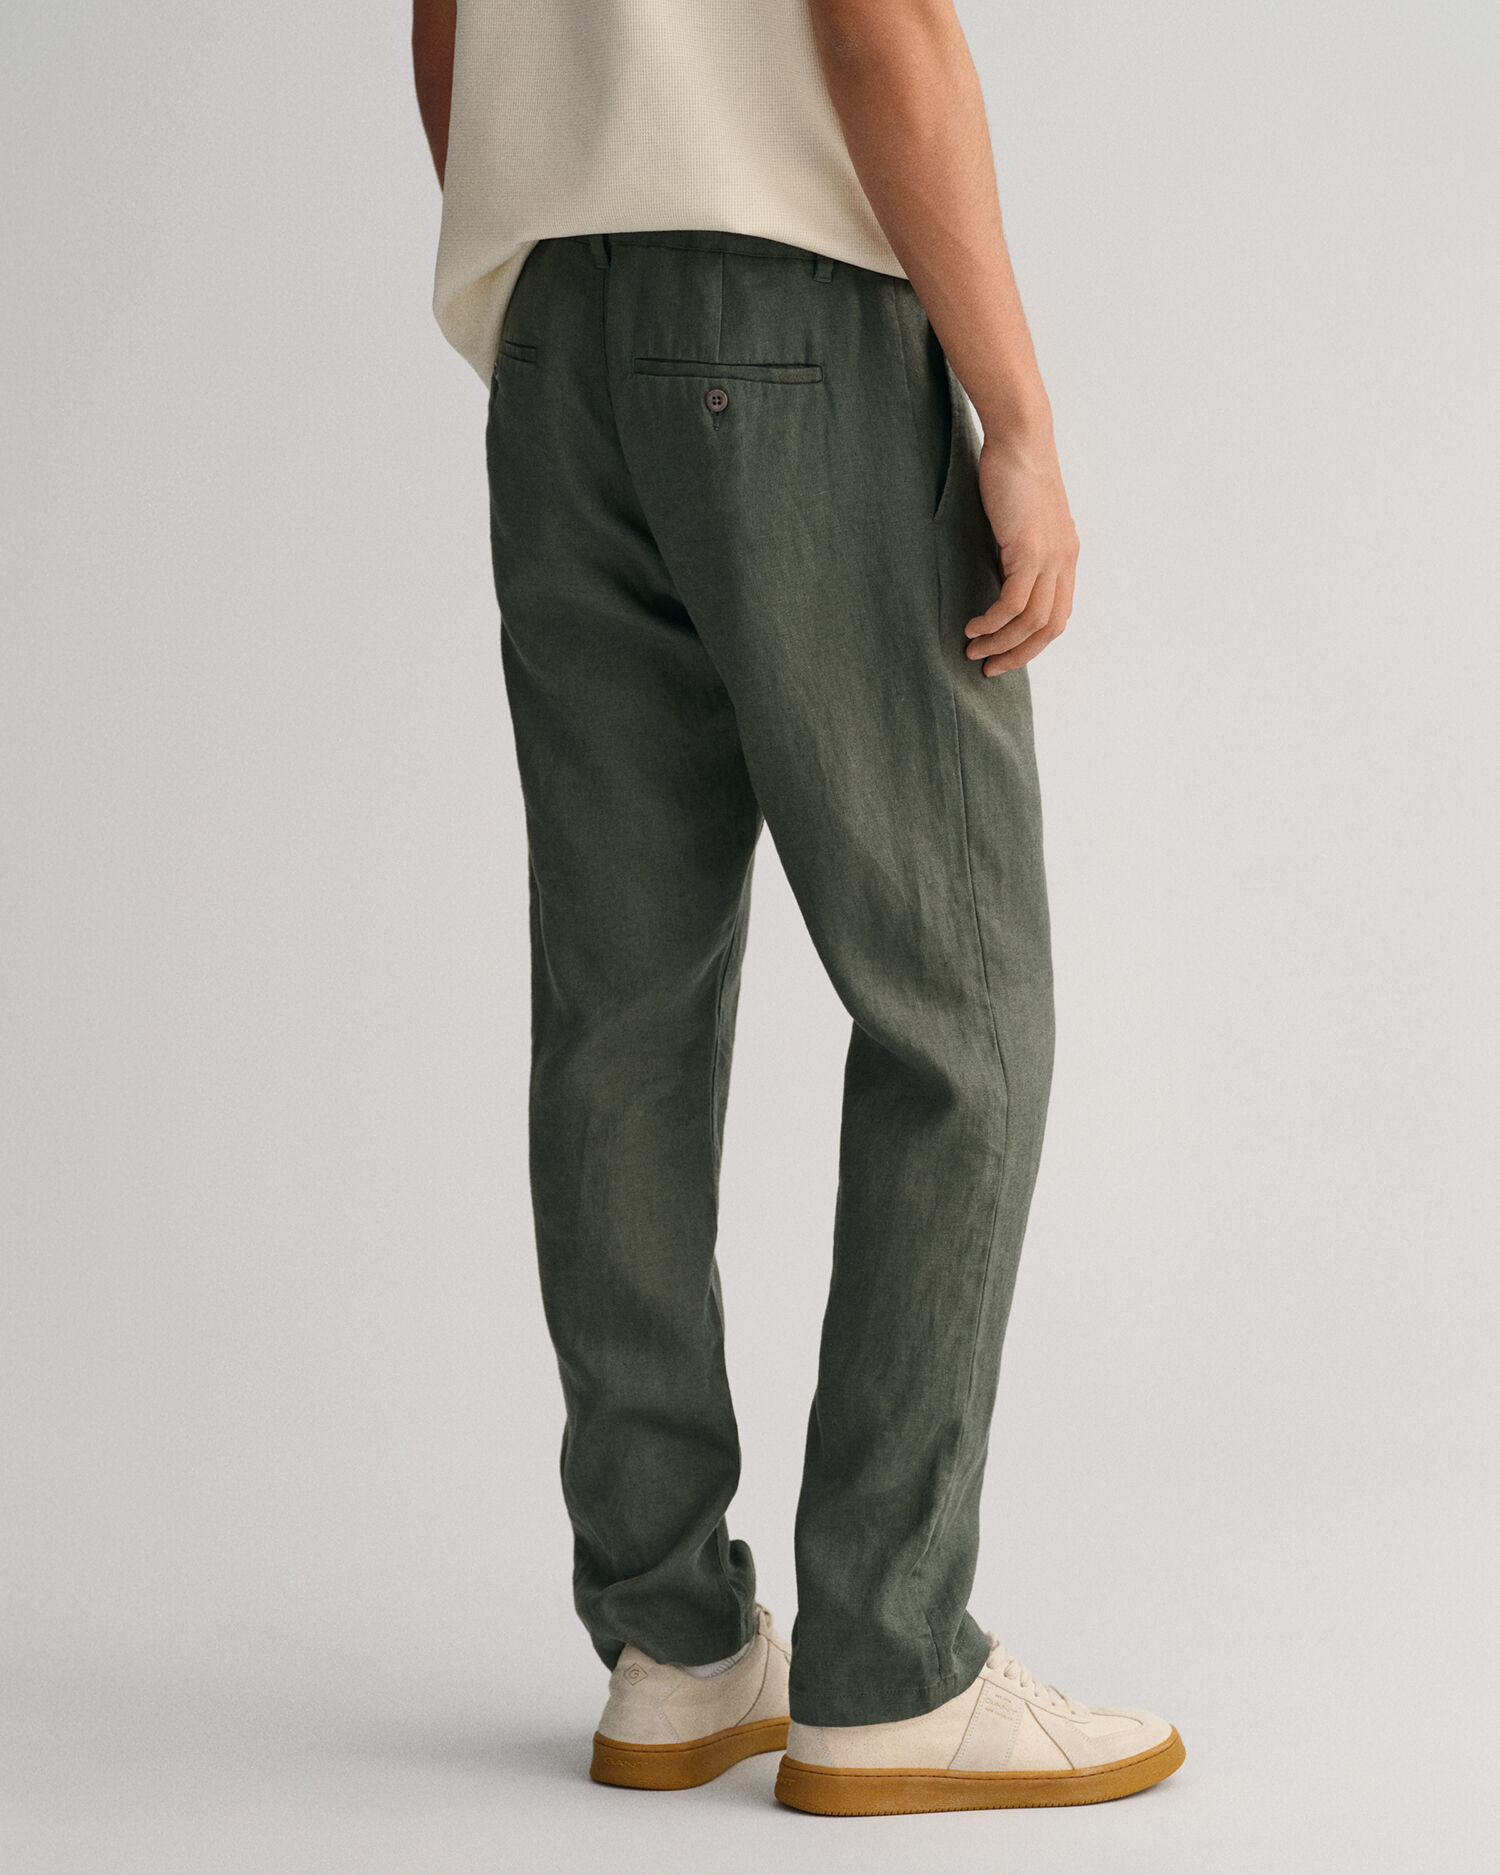 Drawstring Linen Pants For Men. Men's Resort Lounge 100% Linen Flat front  Dress Pants. Runs Small. Natural Color.